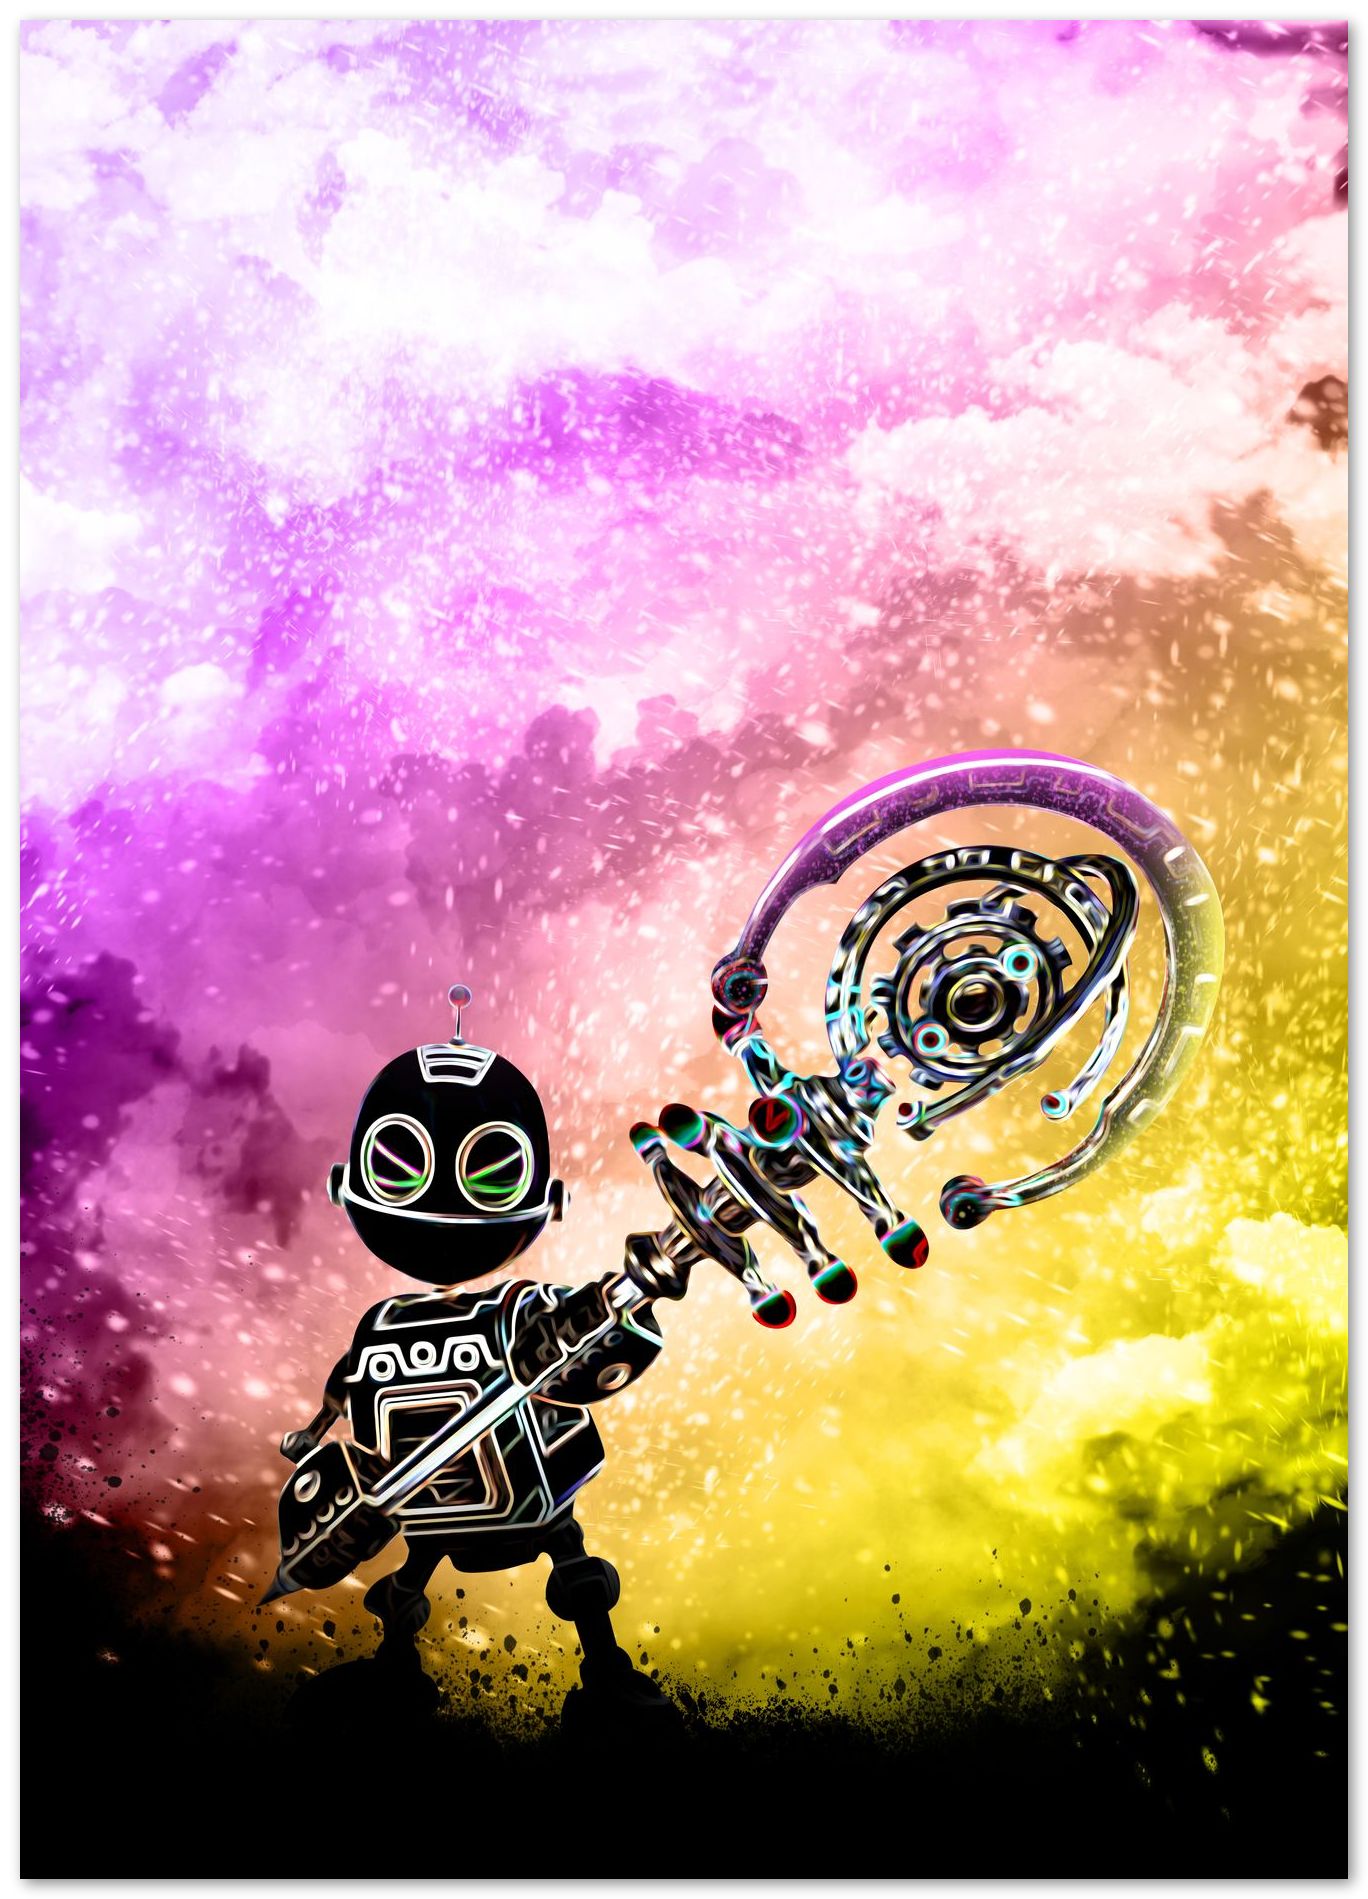 Ratchet & Clank colorful illustration - @ArtCreative